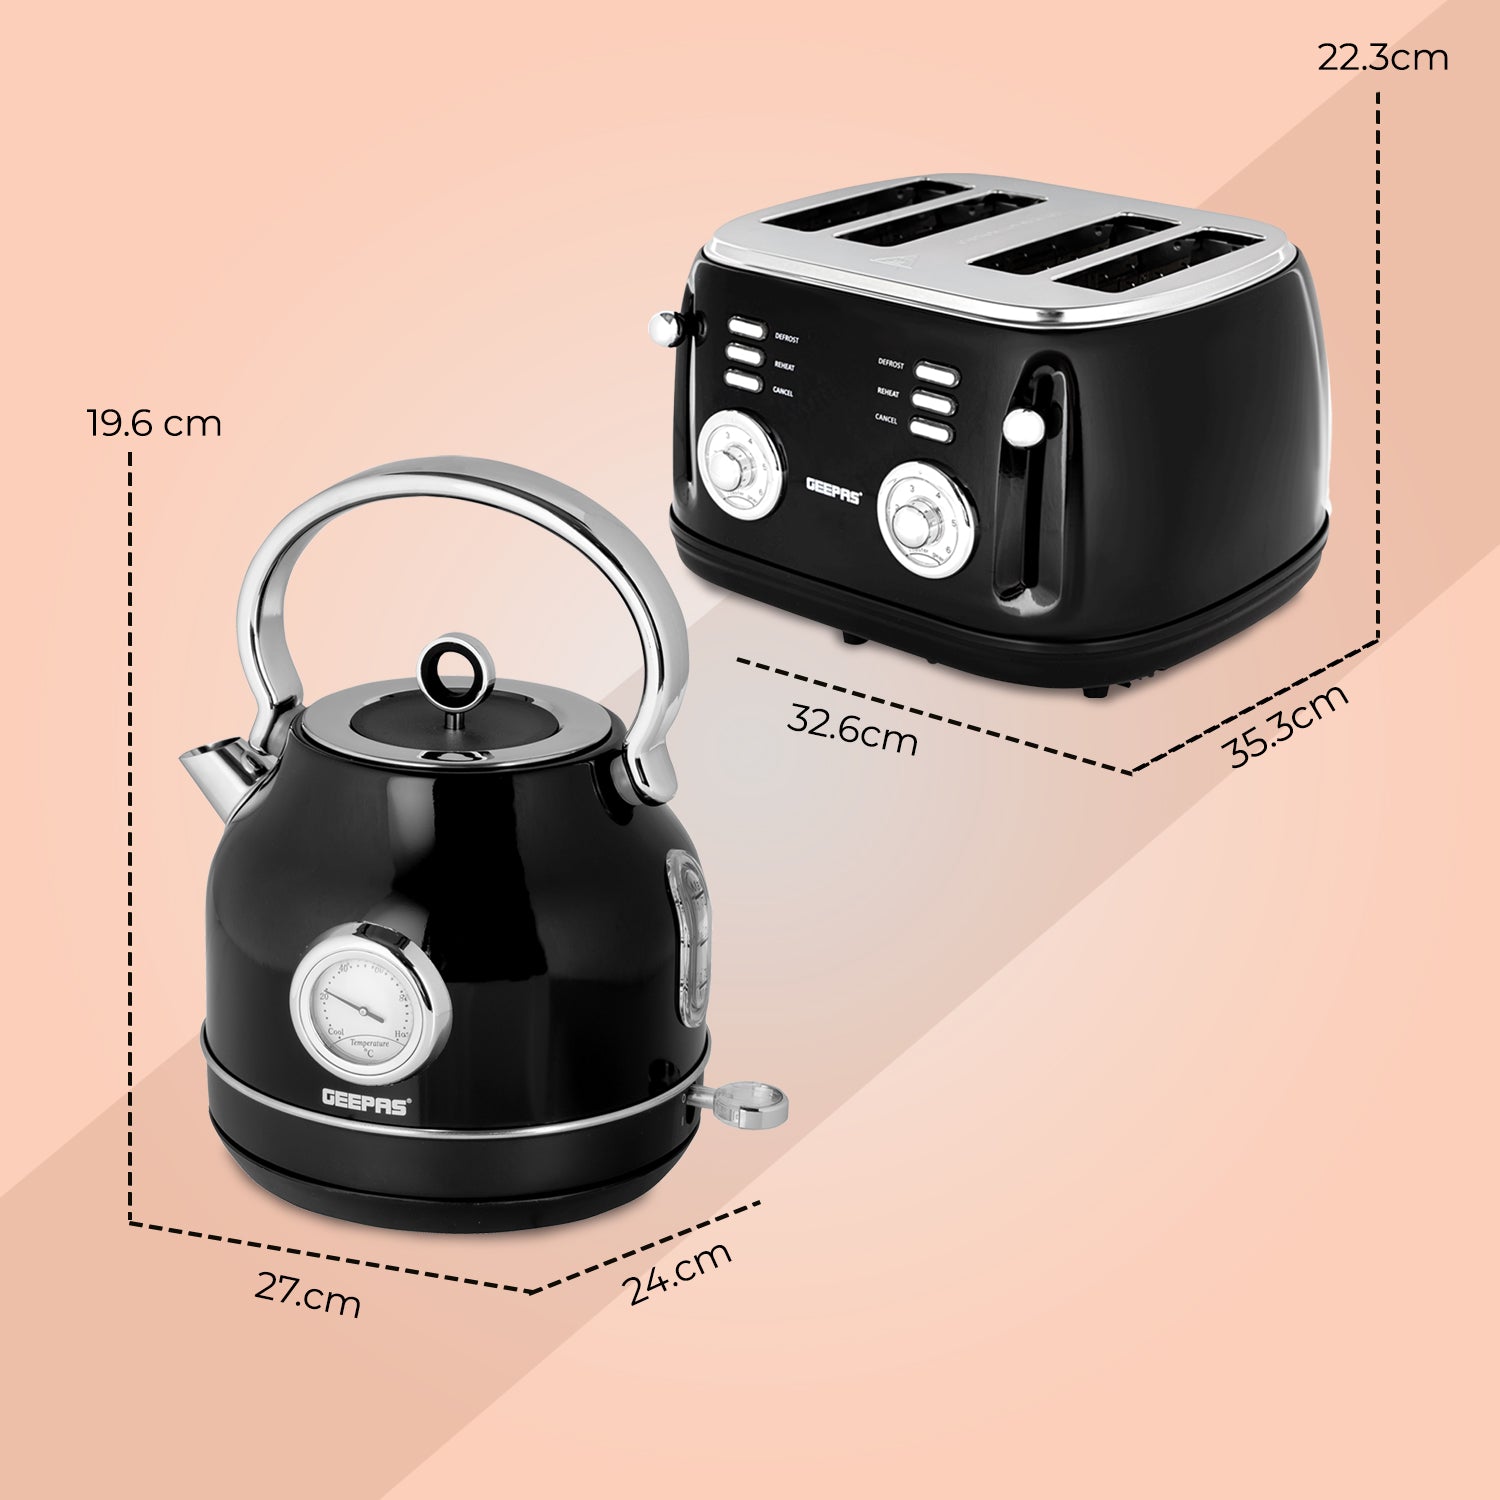 Geepas | For you. For life. Vintage Electric Kettle & 4 Slice Toaster Set Kettle & Toaster Set